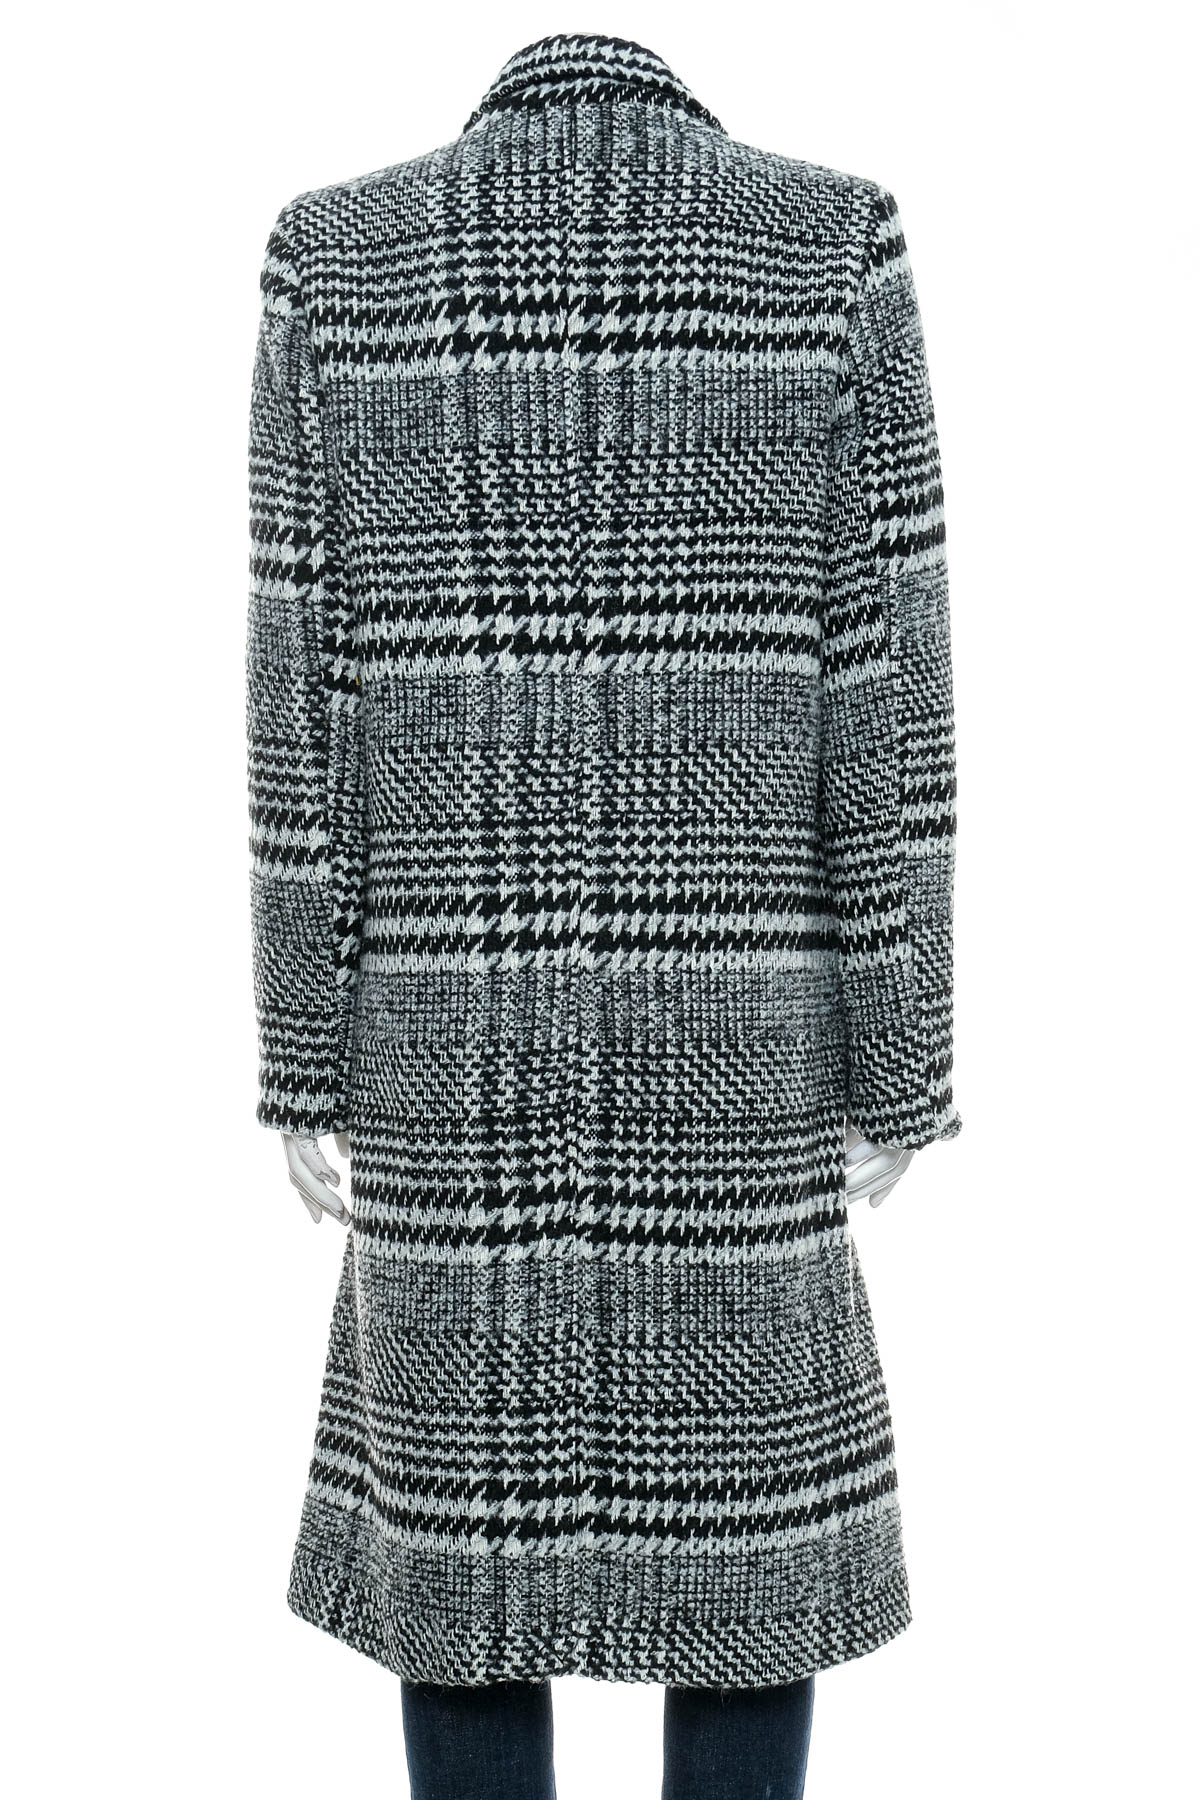 Women's coat - 1